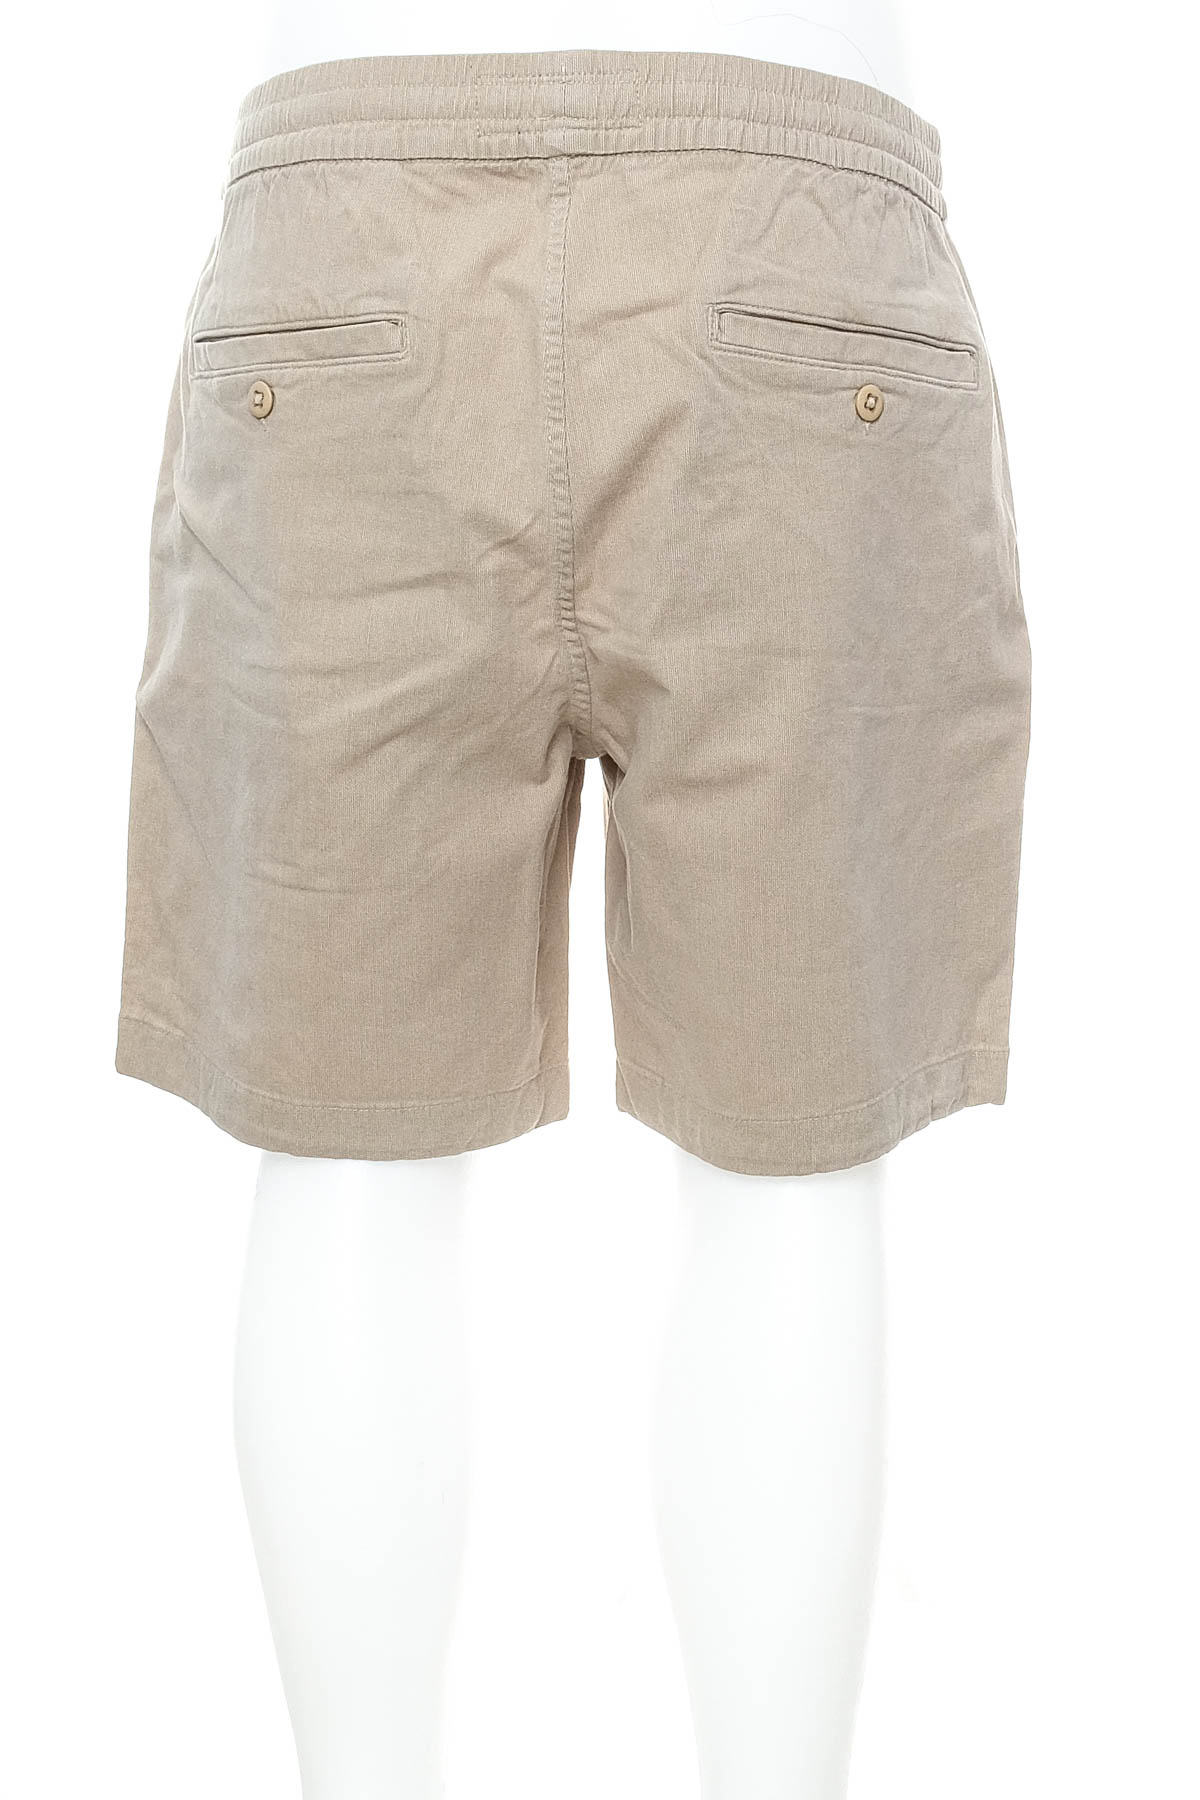 Pantaloni scurți bărbați - Abercrombie & Fitch - 1